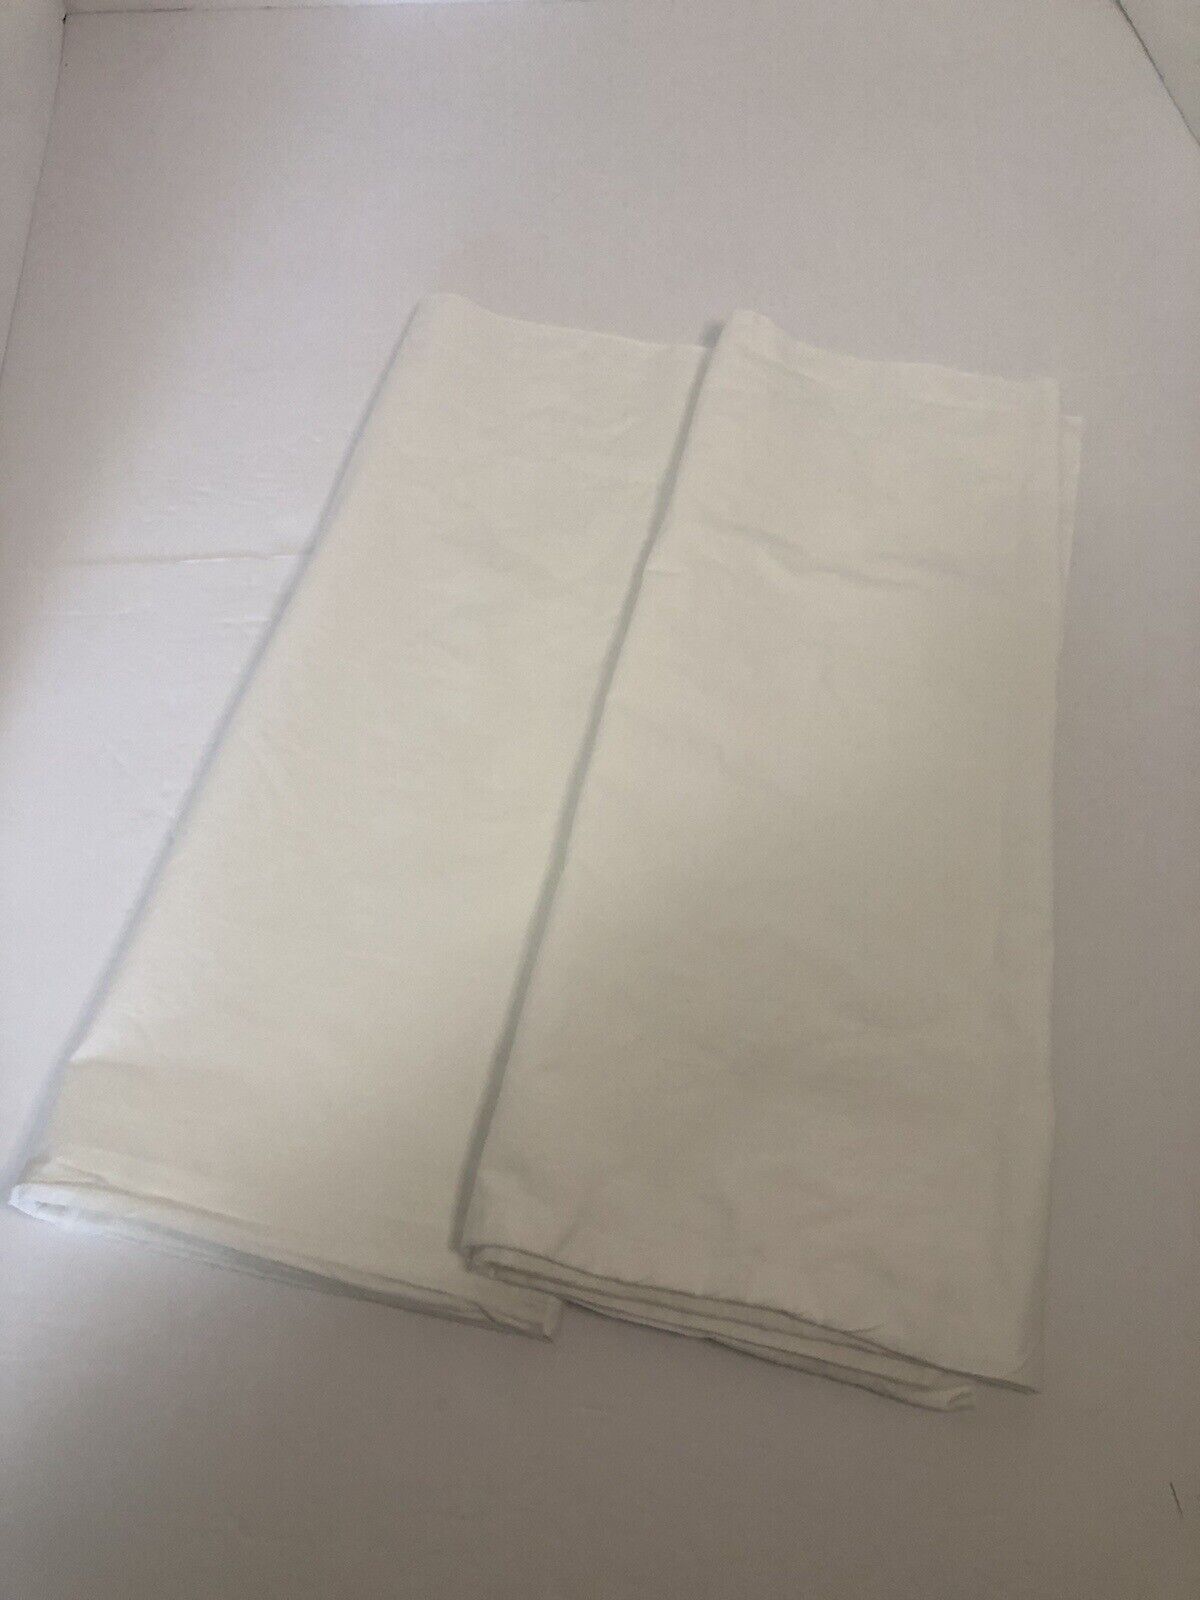 Spring Maid Pillowcases Standard Size 100% Cotton White